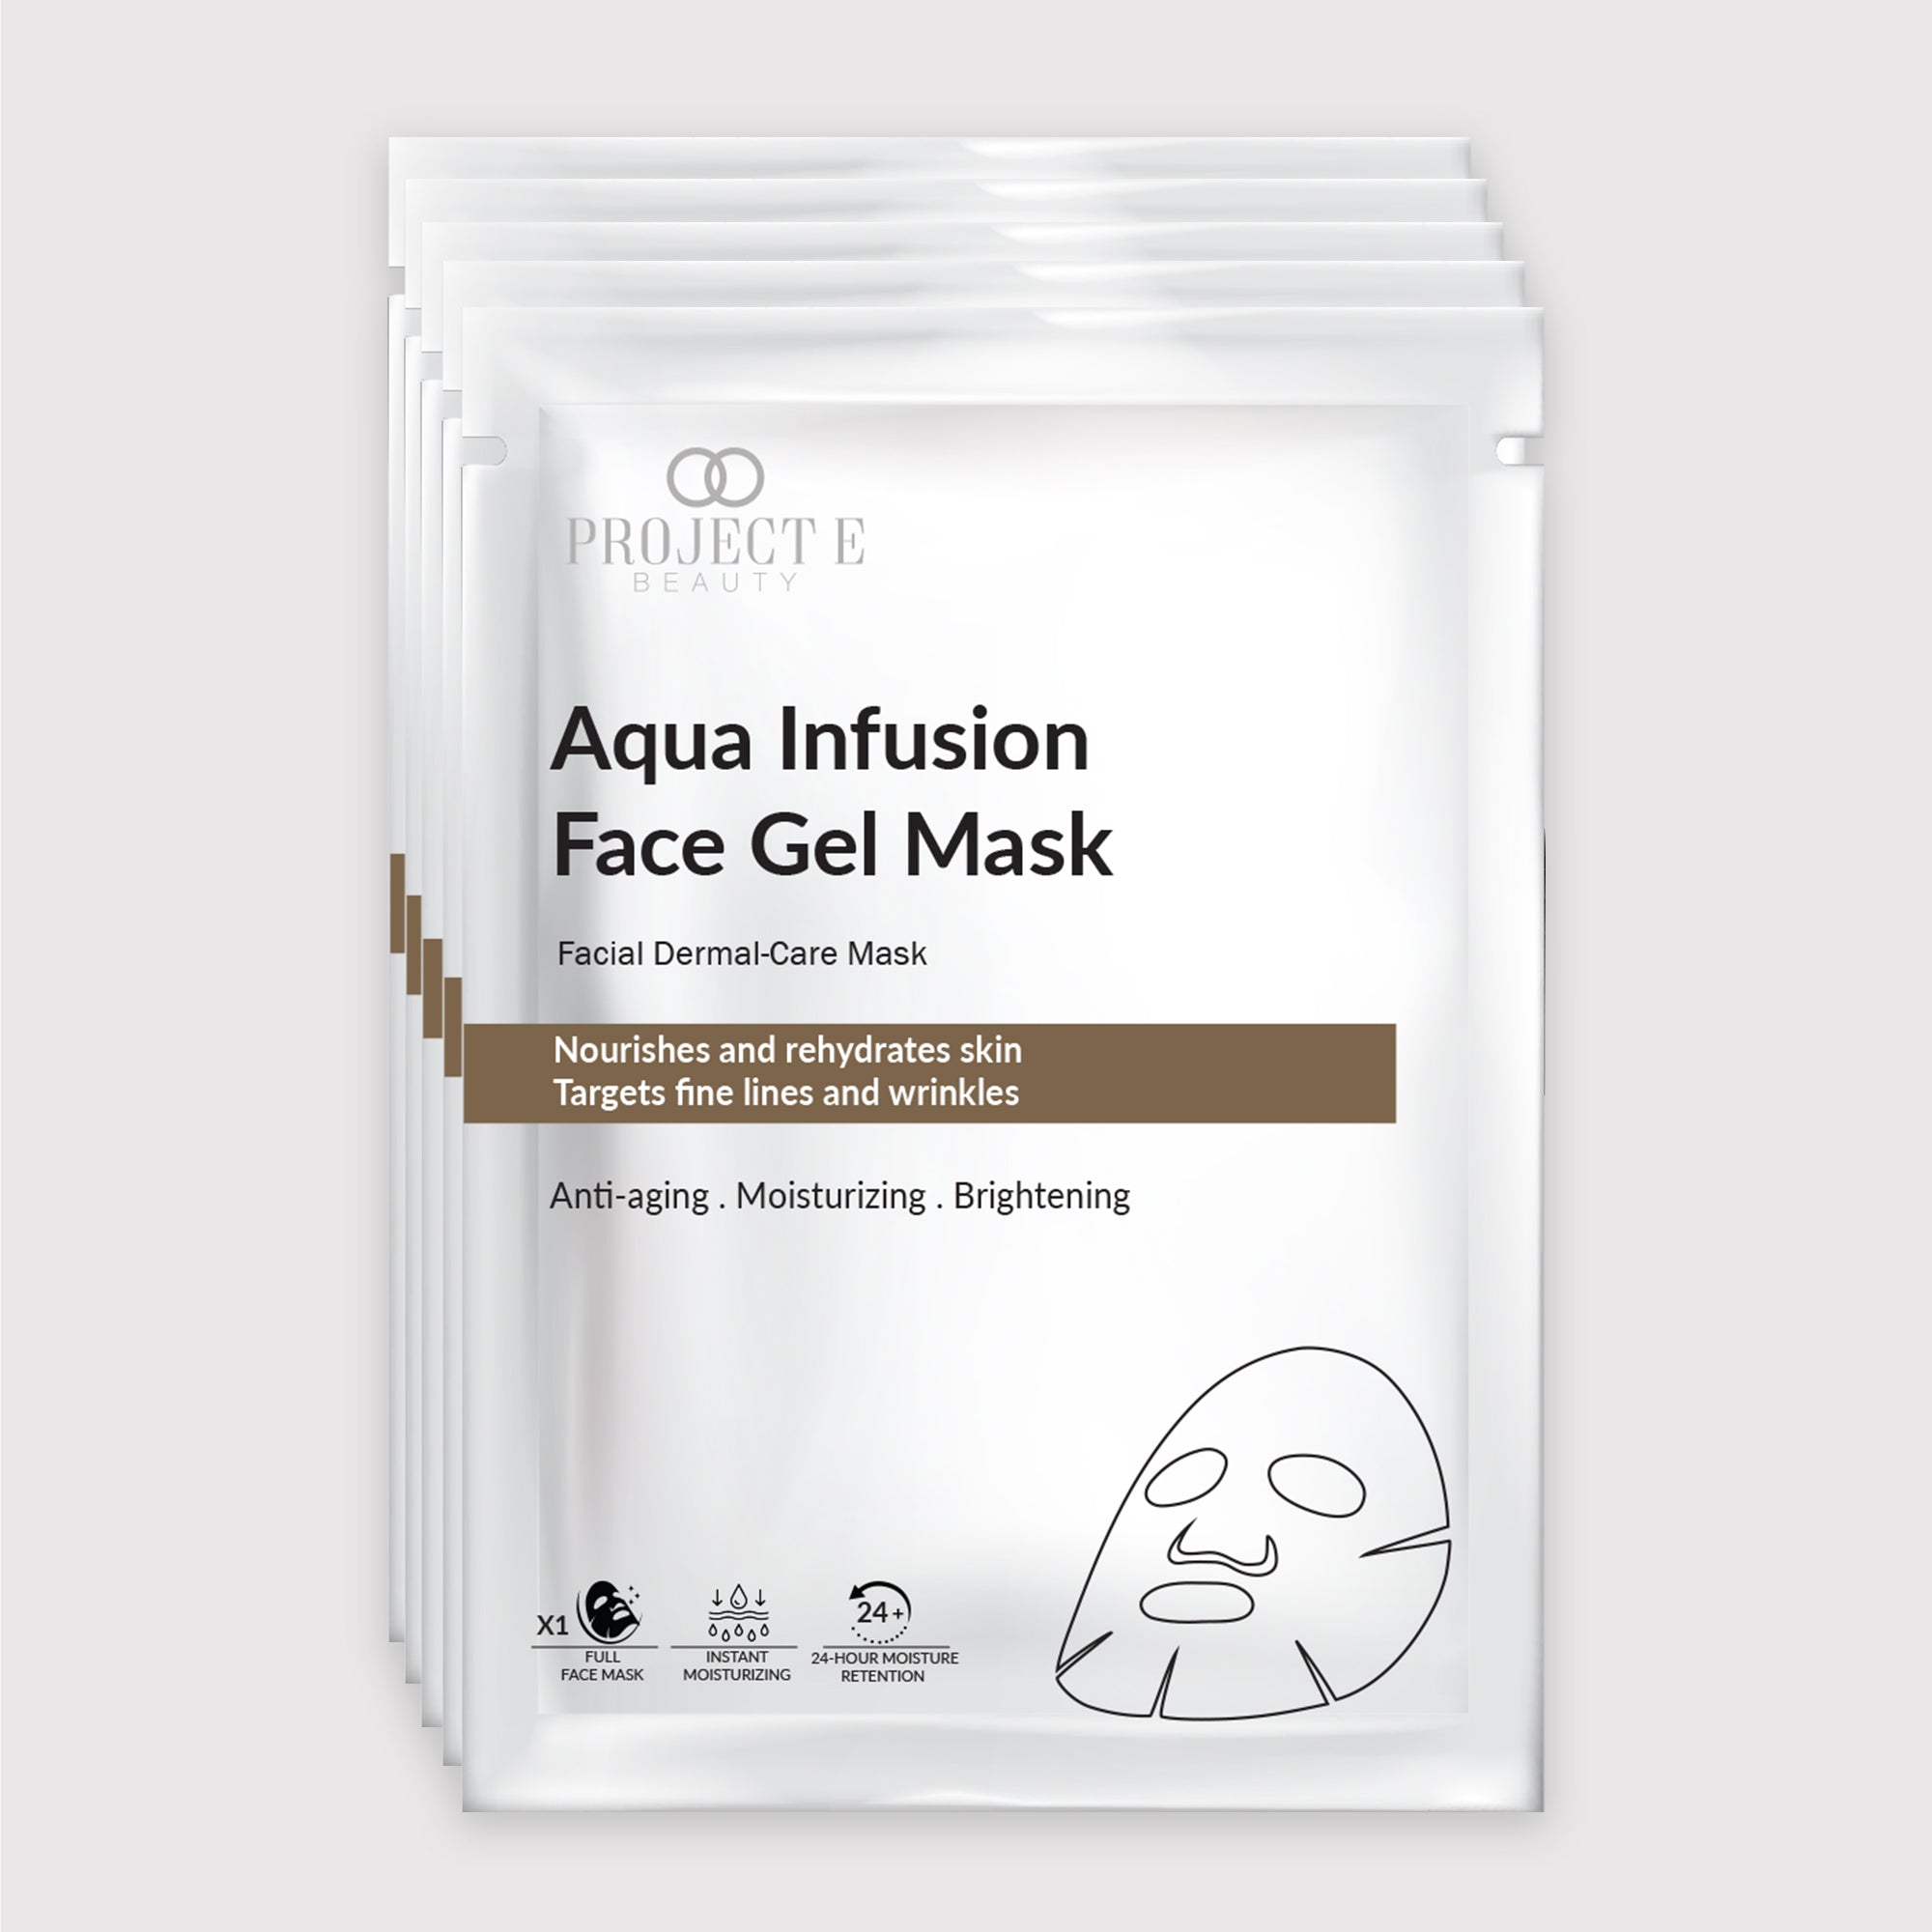 Aqua Infusion Face Gel Mask - Project E Beauty